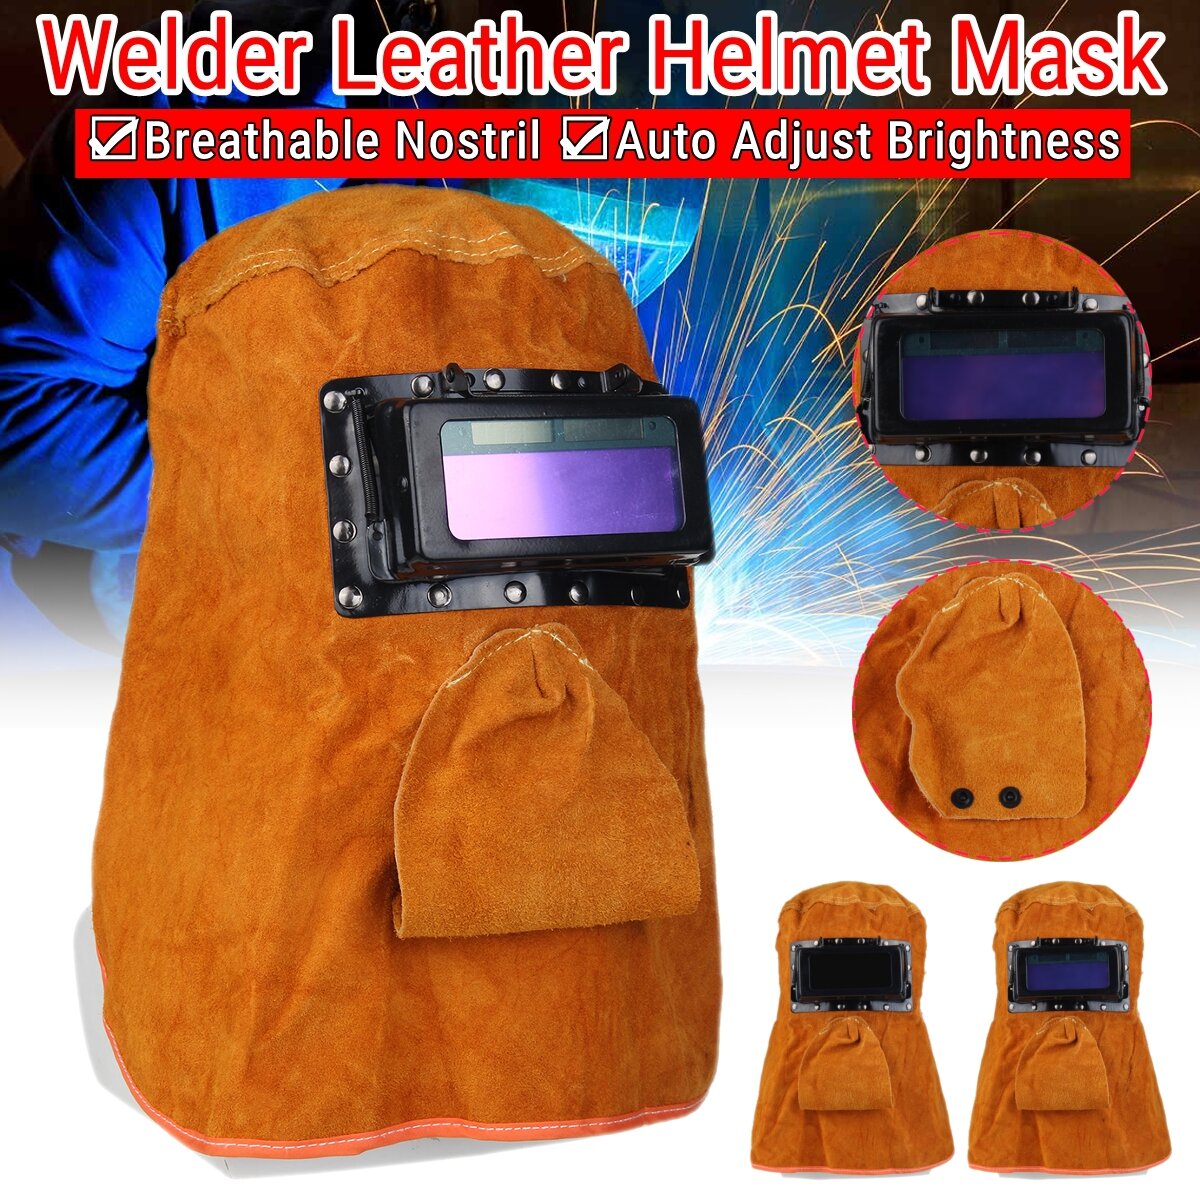 Solar Auto Darkening Filter Lens Welder Leather Hood Breathable Helmet Mask with Glasses